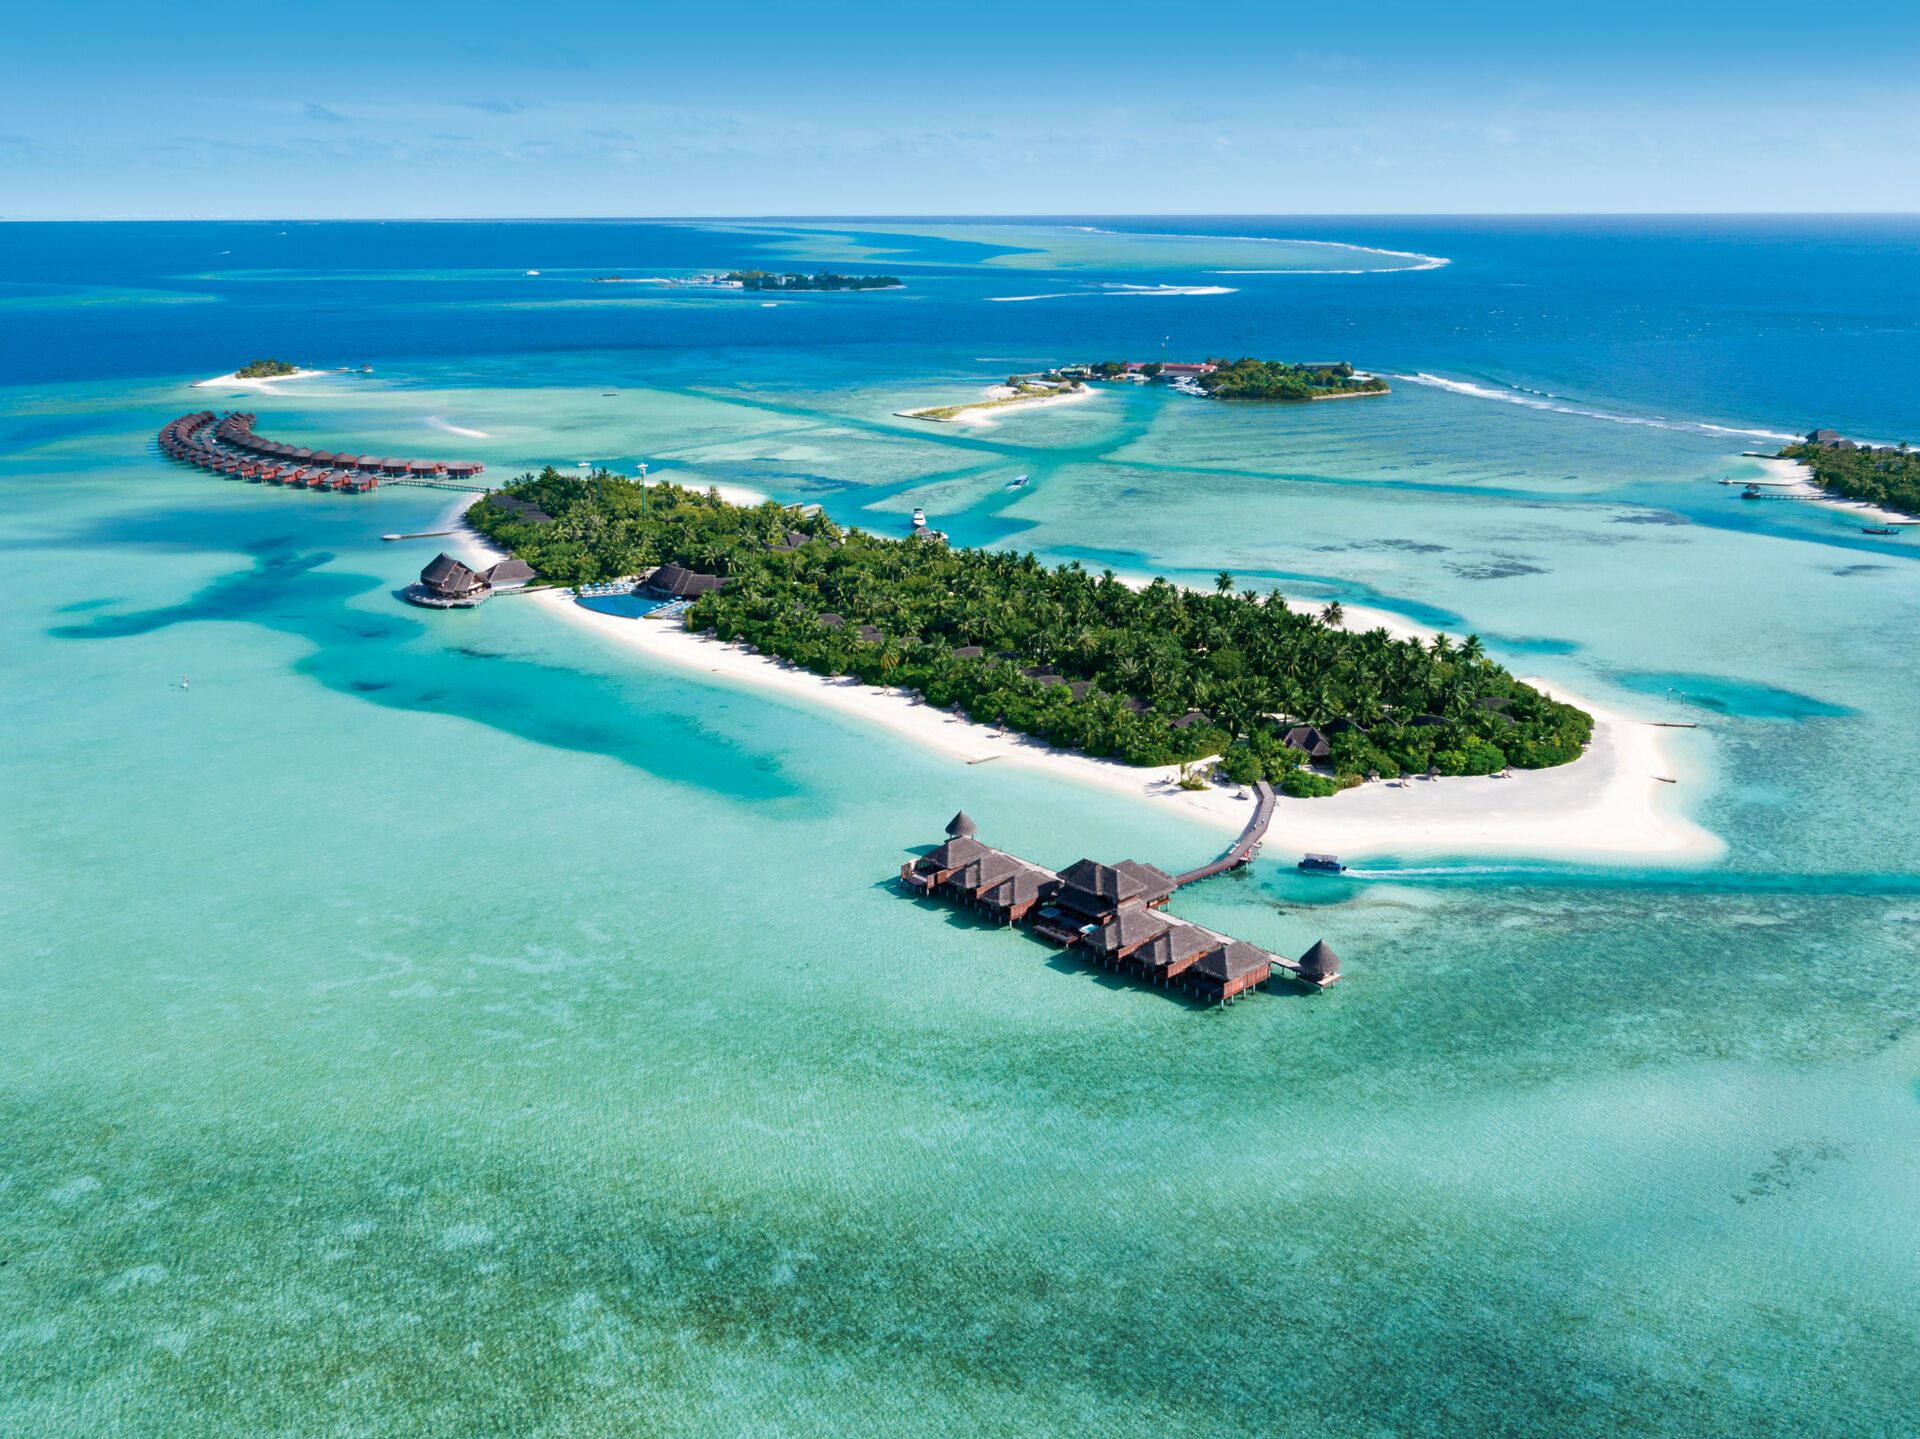 Anantara Dhigu Maldives Resort - transfert inclus - 5*